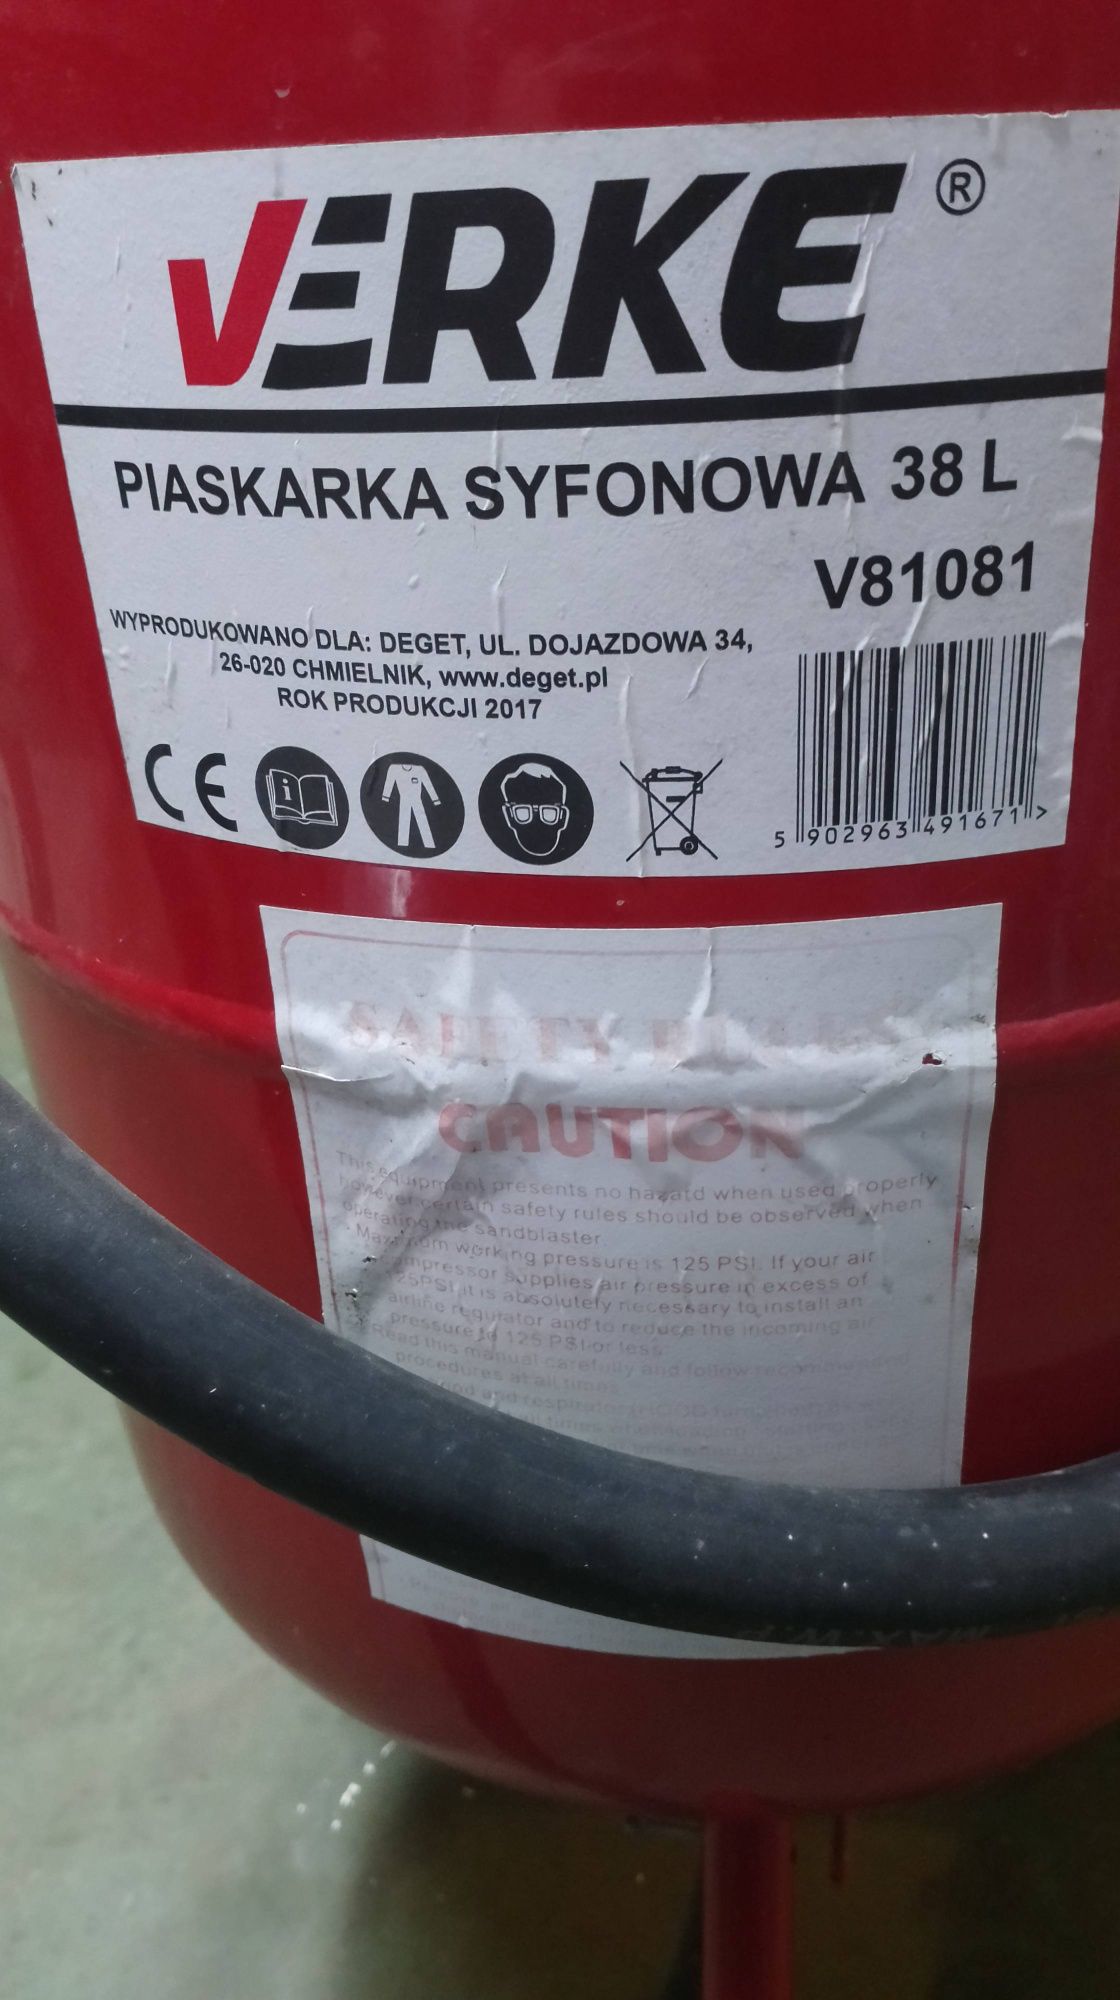 Piaskarka Verke 38 litrów